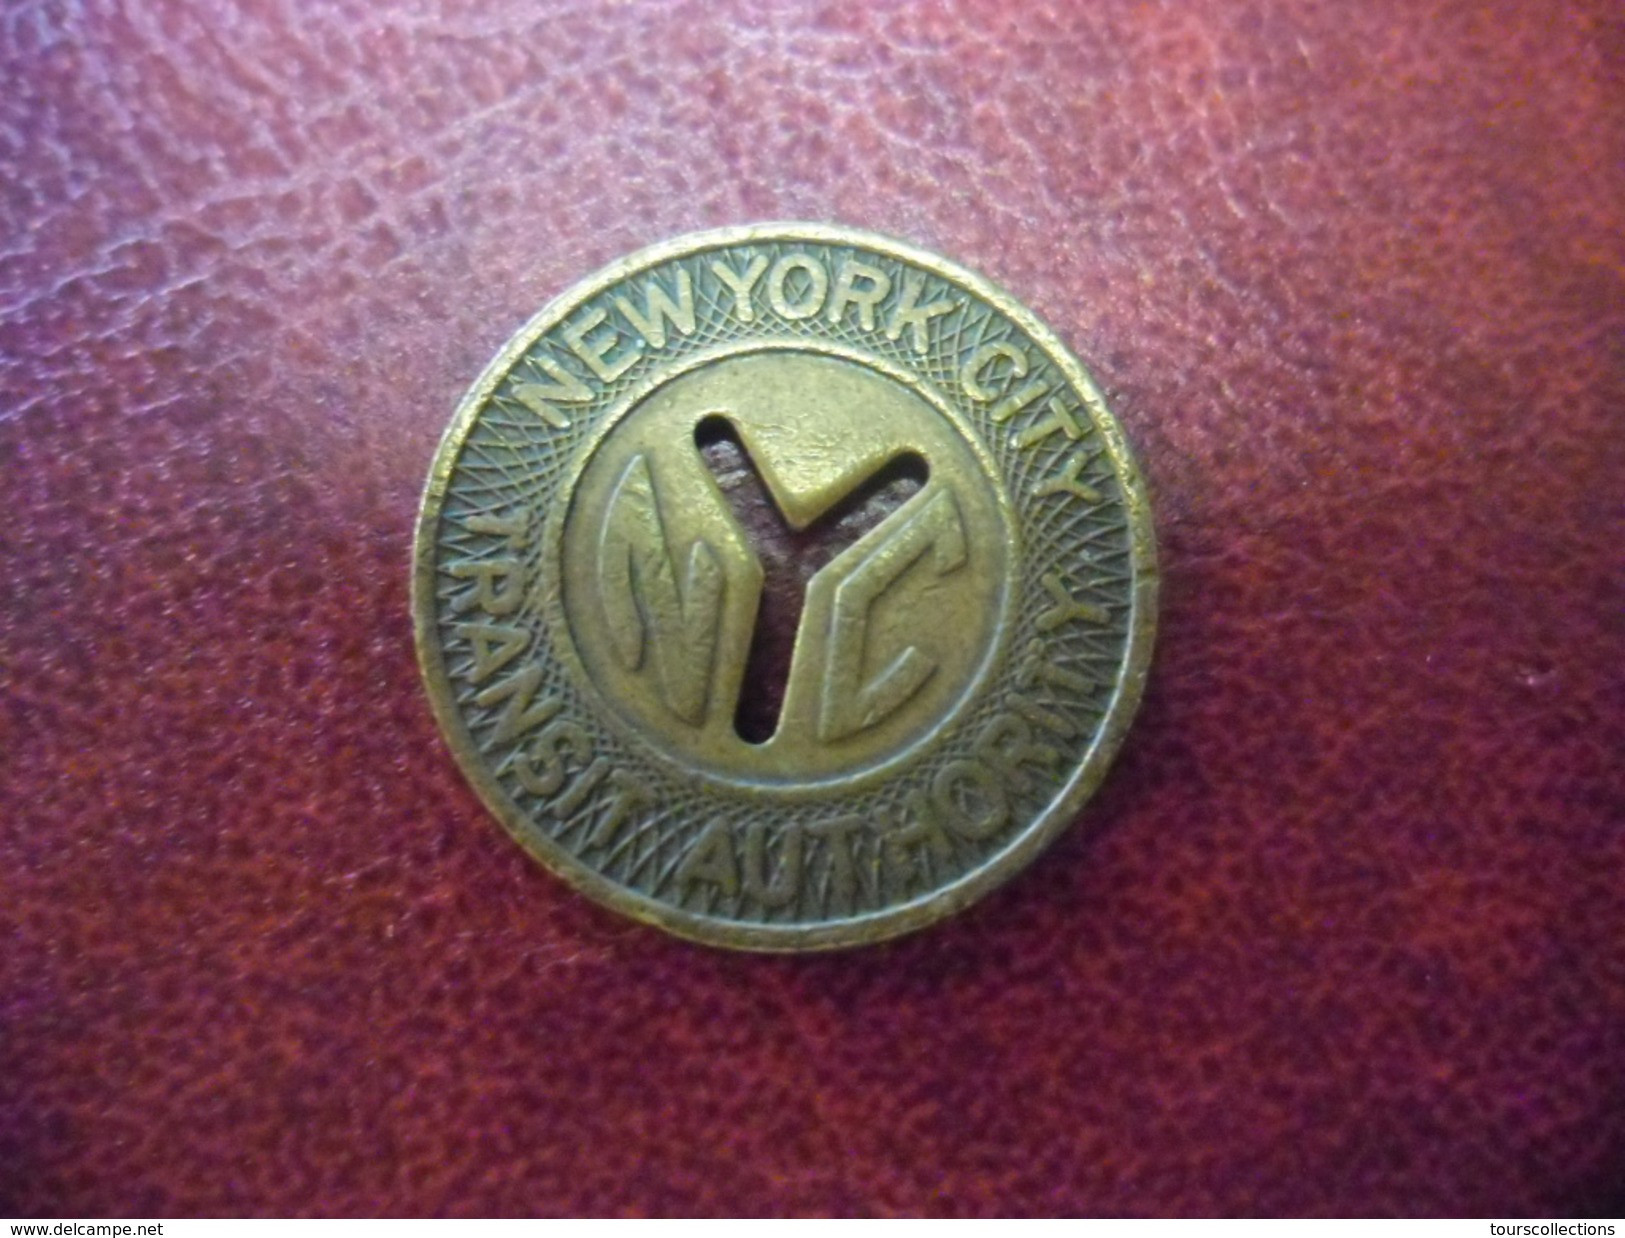 JETON New York City, New York Transit Authority One Fare Transit Token - Subway Métro Vers 1953 à 1970 - Monetari/ Di Necessità